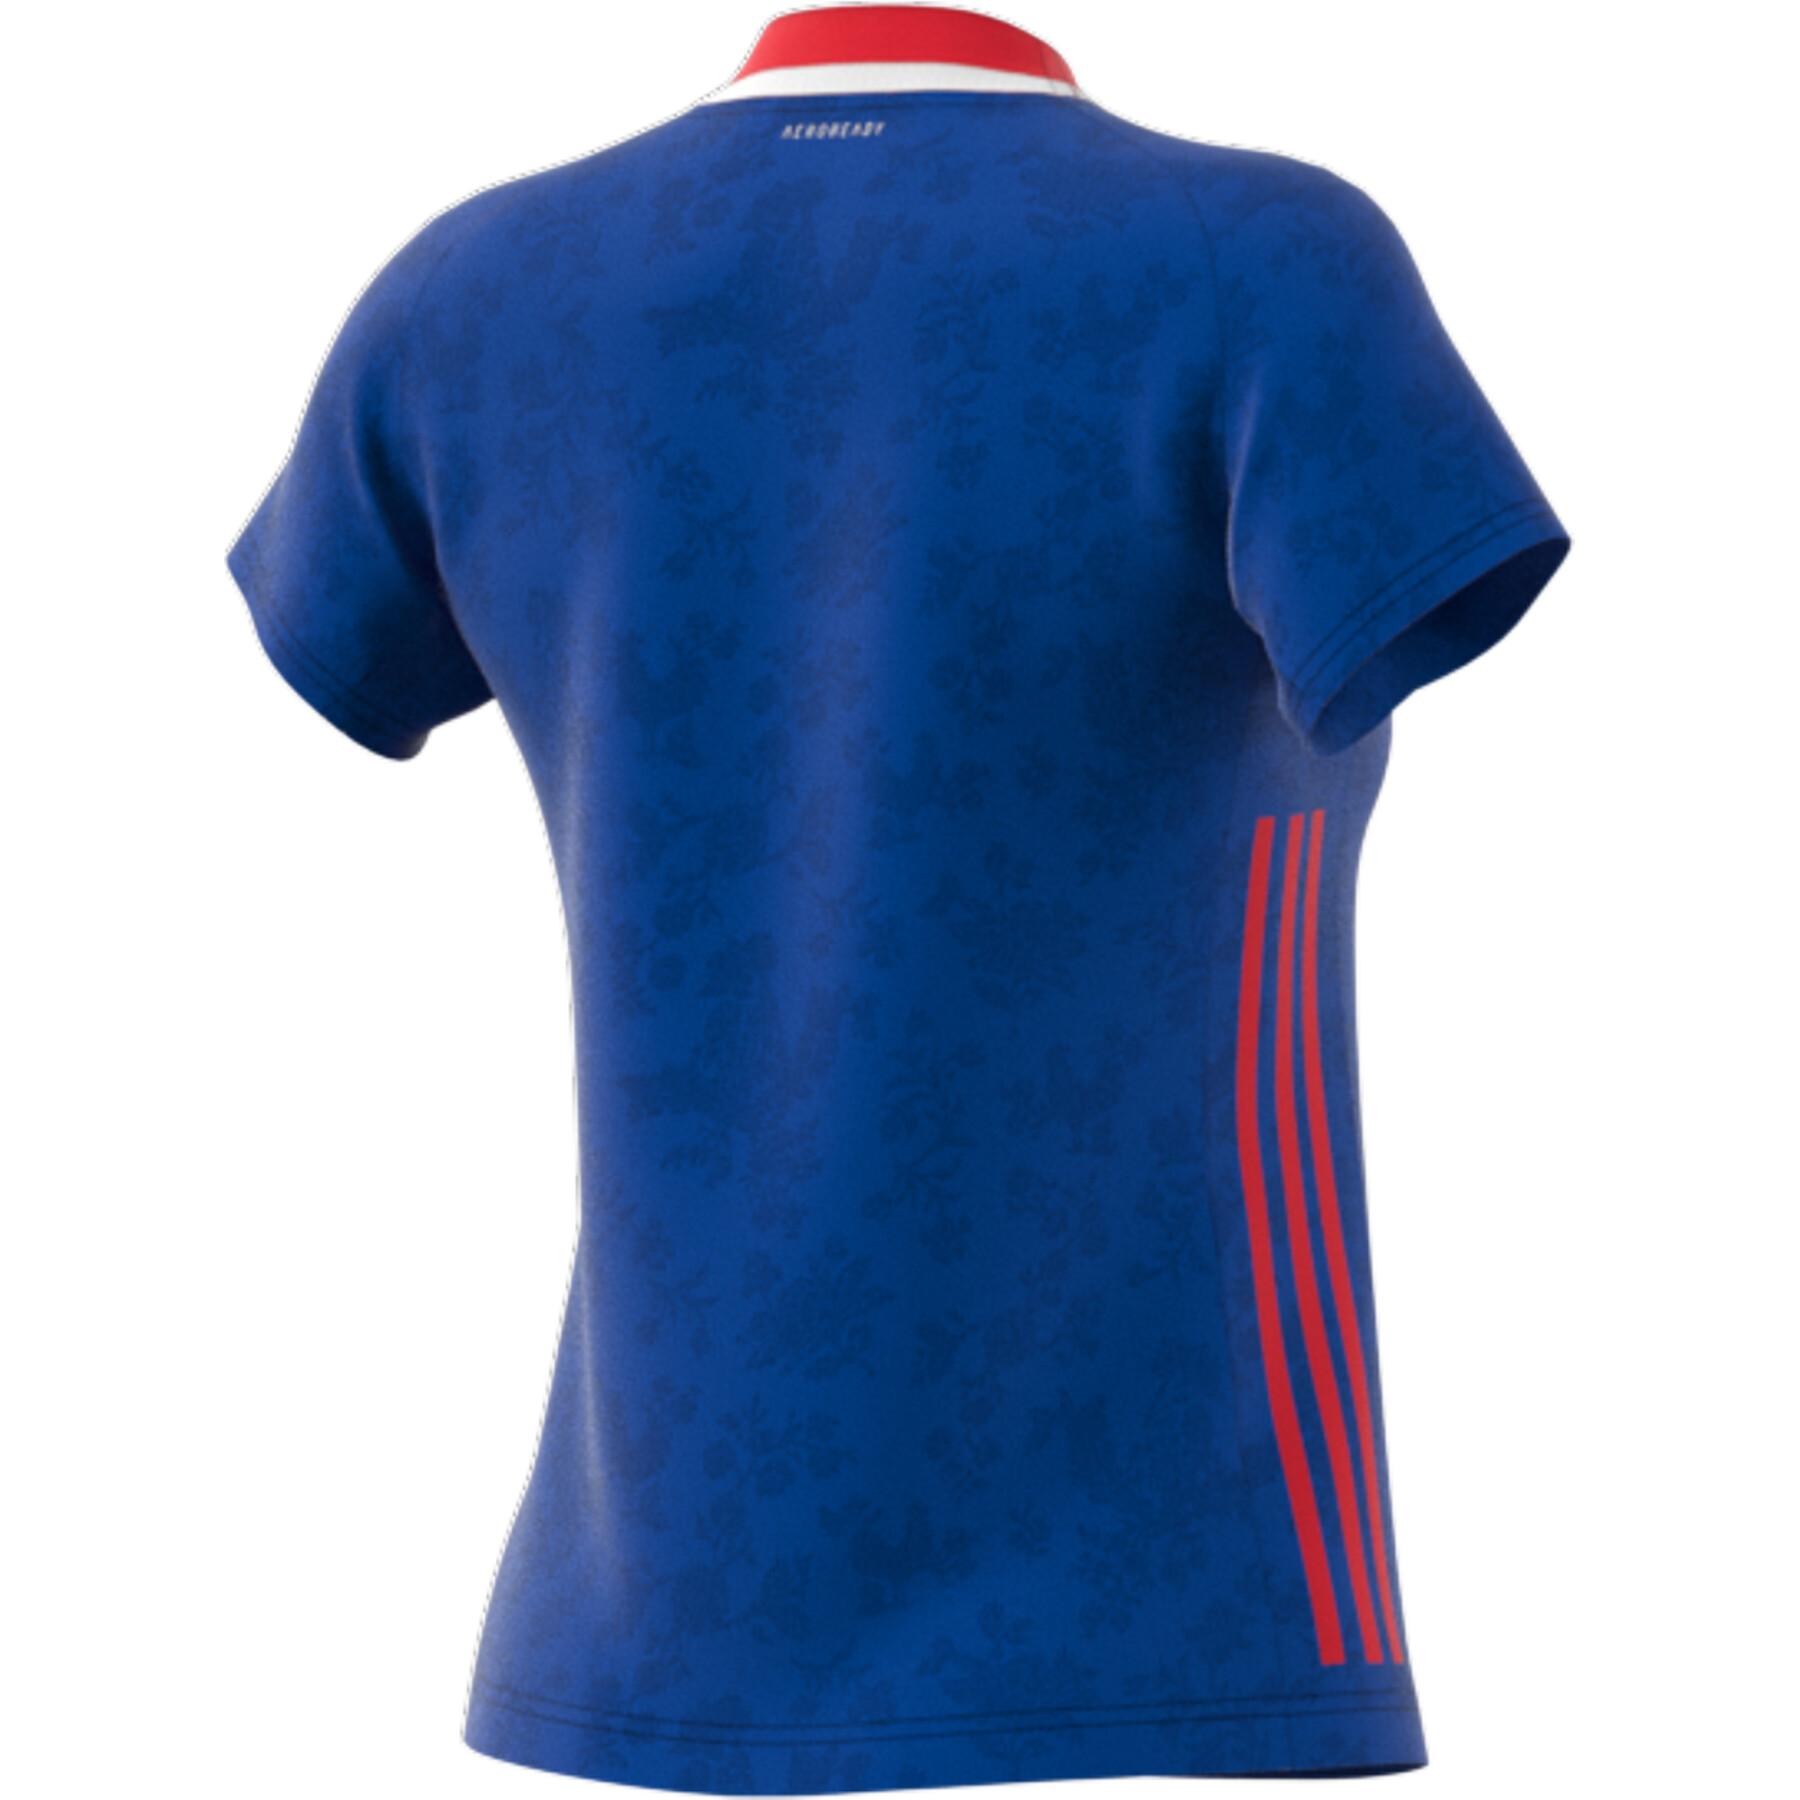 Women's home jersey France 2021/22